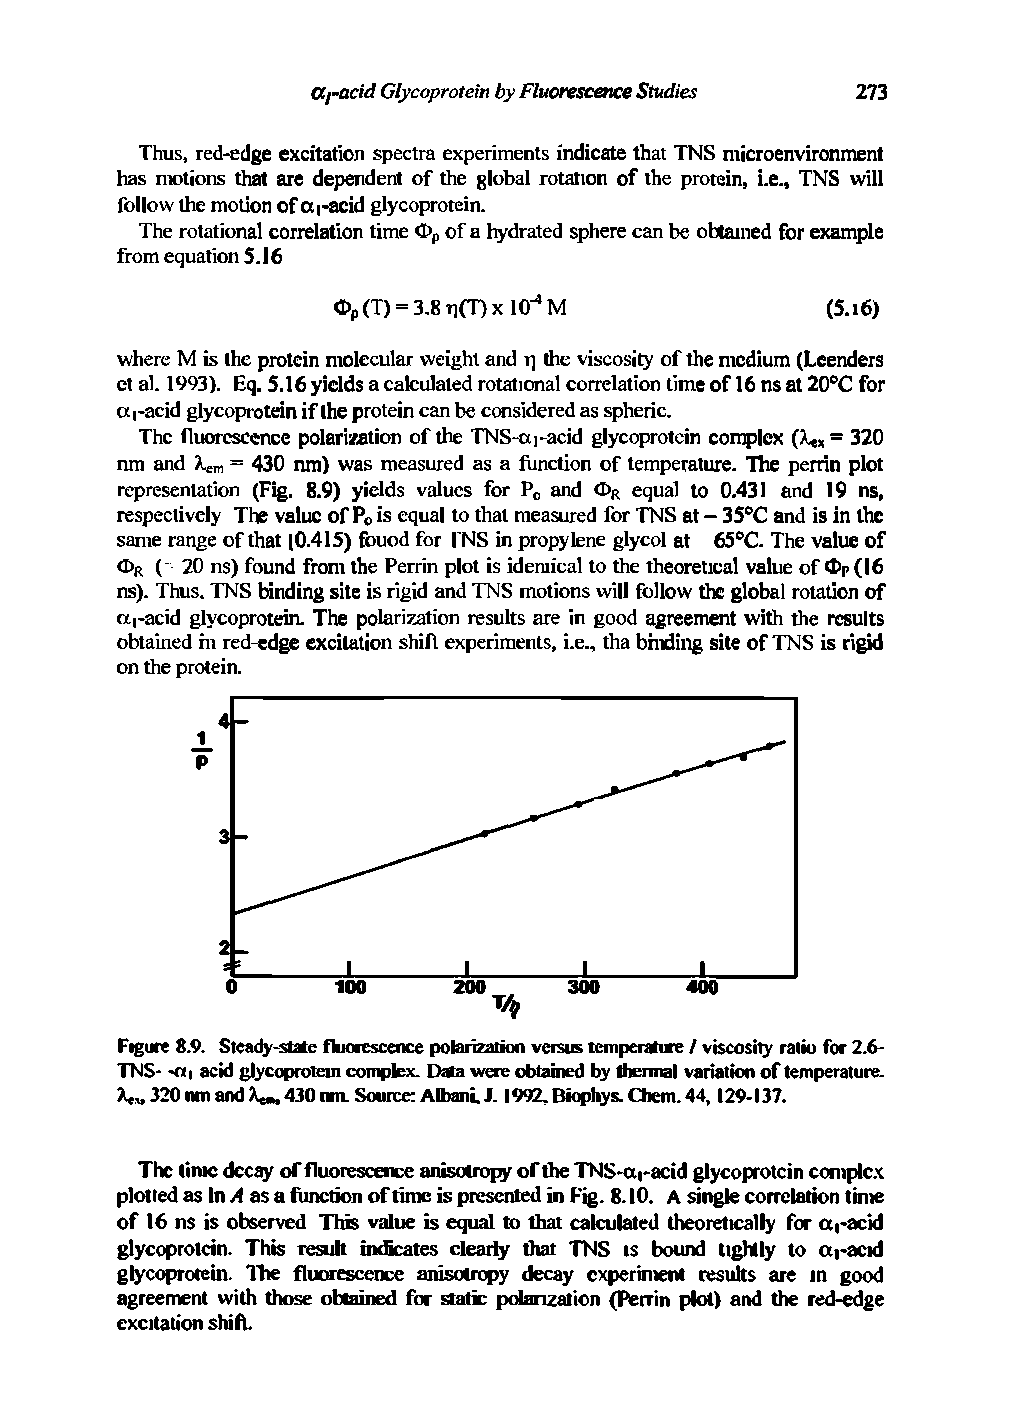 Figure 8.9. Steady-state fluorescence polarization veisis temperatm / viscosity ratio for 2.6-TNS- ni acid glycoprotein cxmiplex. DSa were obtained by Ihennal variation of temperature. X u 320 nm and XcB, 430 nm. Source Albani, J. l992,Biopliys.Chem.44,129-137.